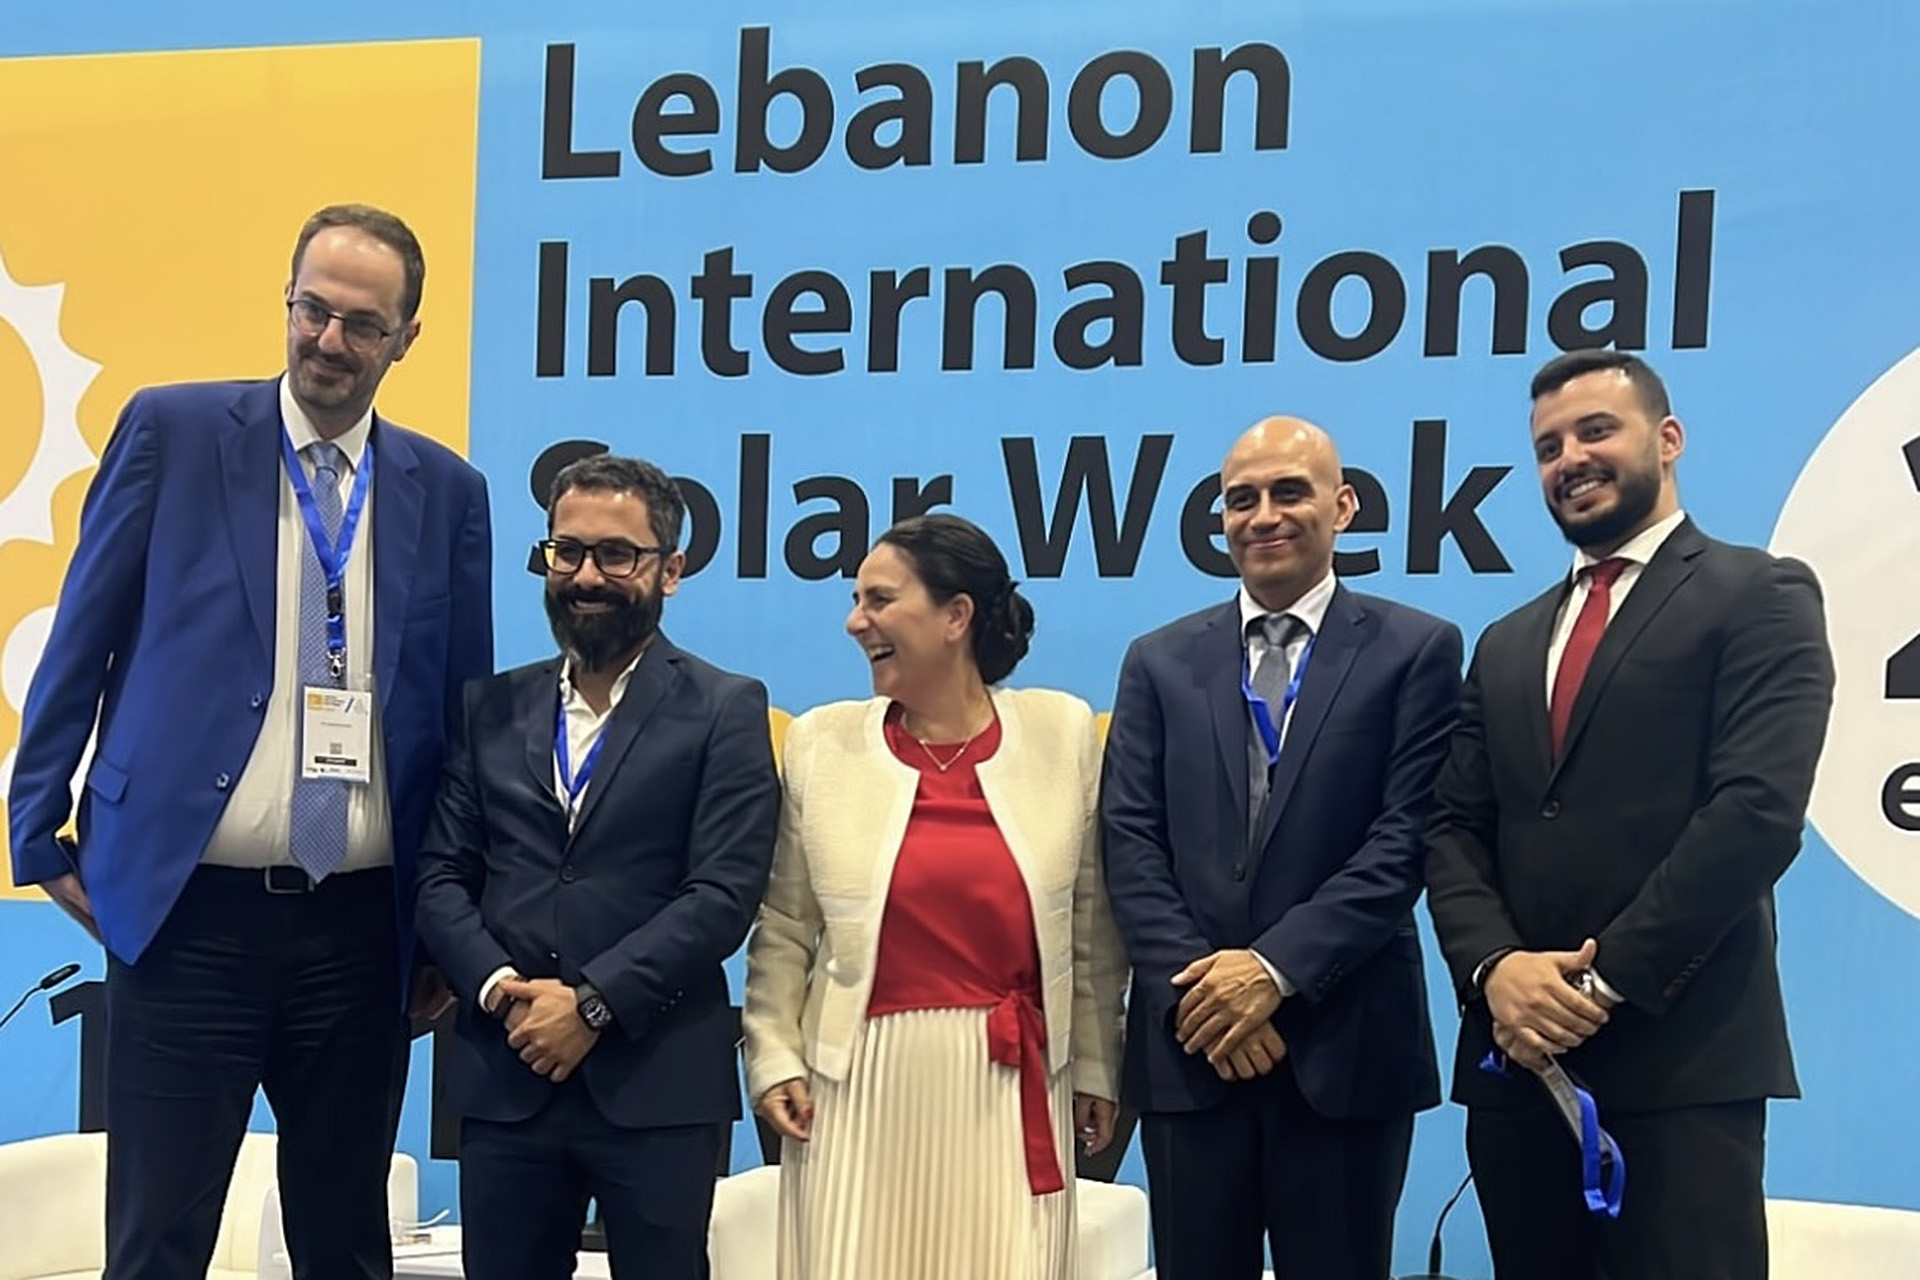 Group photo at the Lebanon International Solar Week